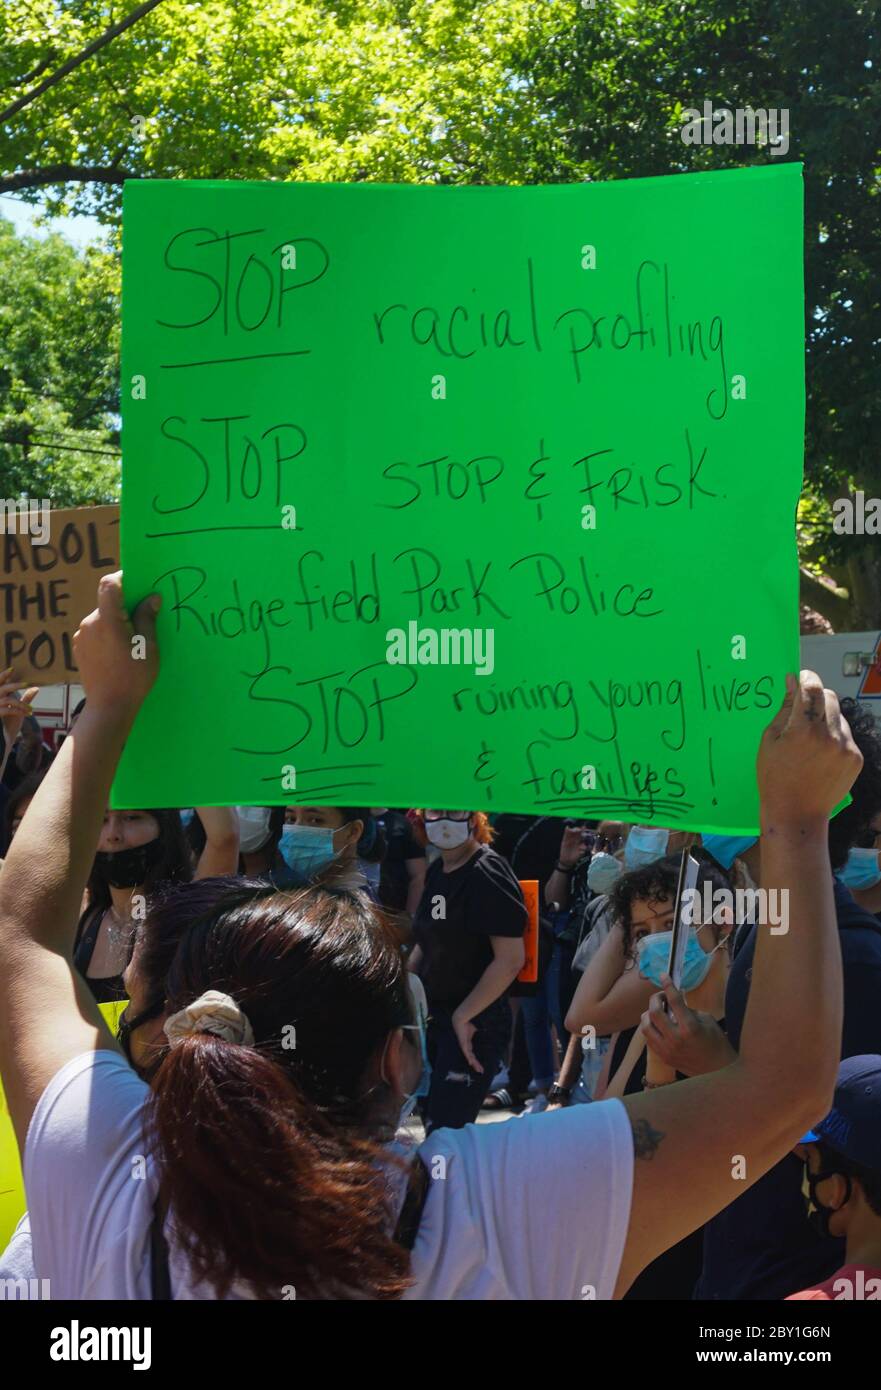 Black Lives Matter Protest George Floyd - Stop Frisking Ridgefield Park cops green sign - ridgefield Park, comté de bergen, New Jersey, usa lundi juin Banque D'Images